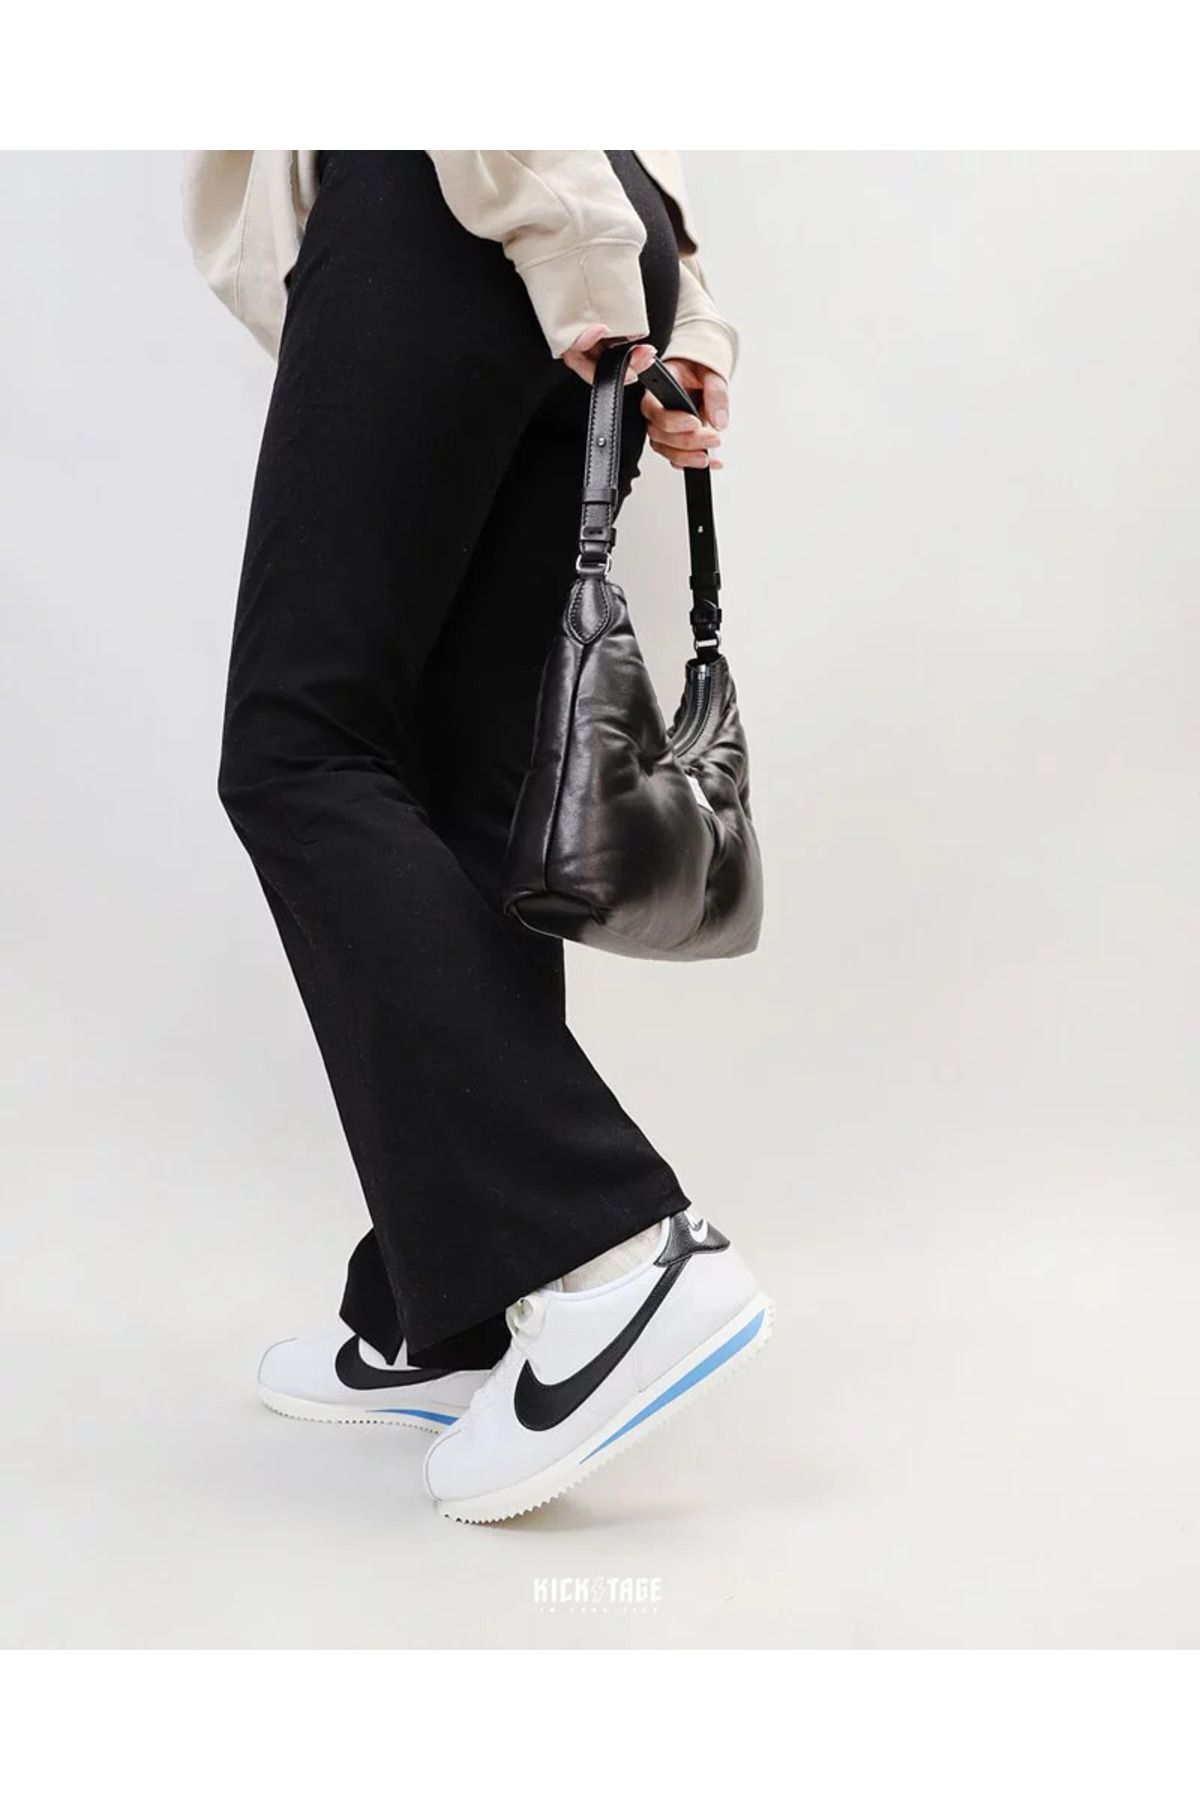 Nike کفش کتانی زنانه ورزشی اسپرت مدل Women Cortez